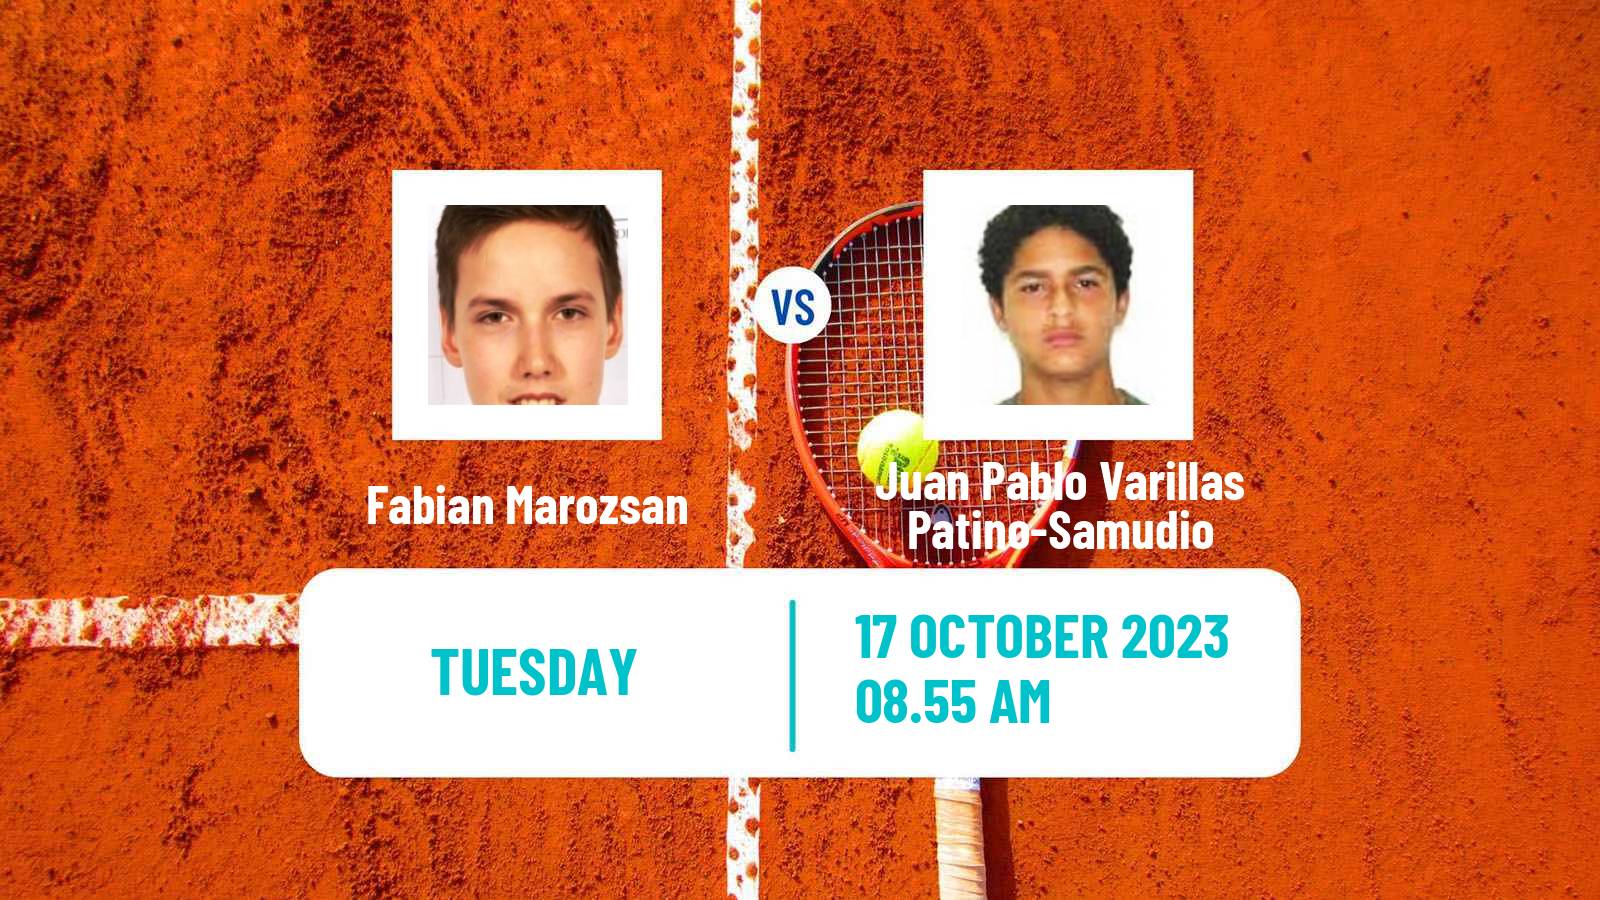 Tennis ATP Antwerp Fabian Marozsan - Juan Pablo Varillas Patino-Samudio